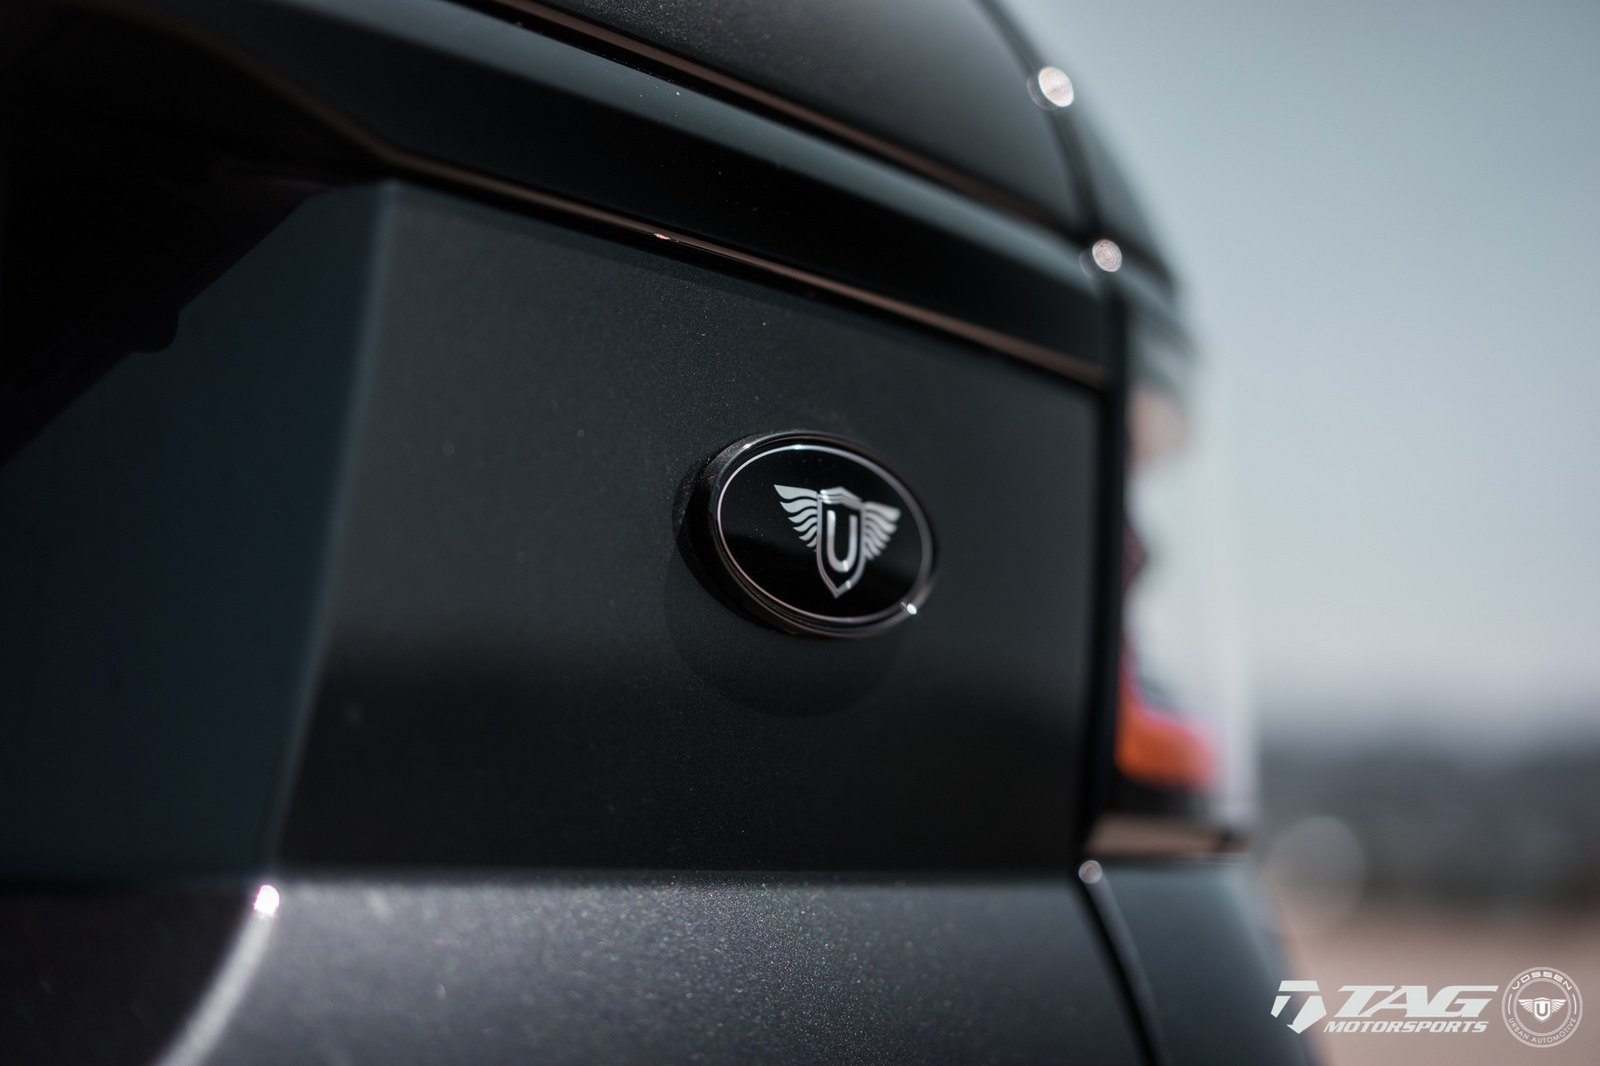 Custom Emblem on Black Range Rover Sport - Photo by Vossen